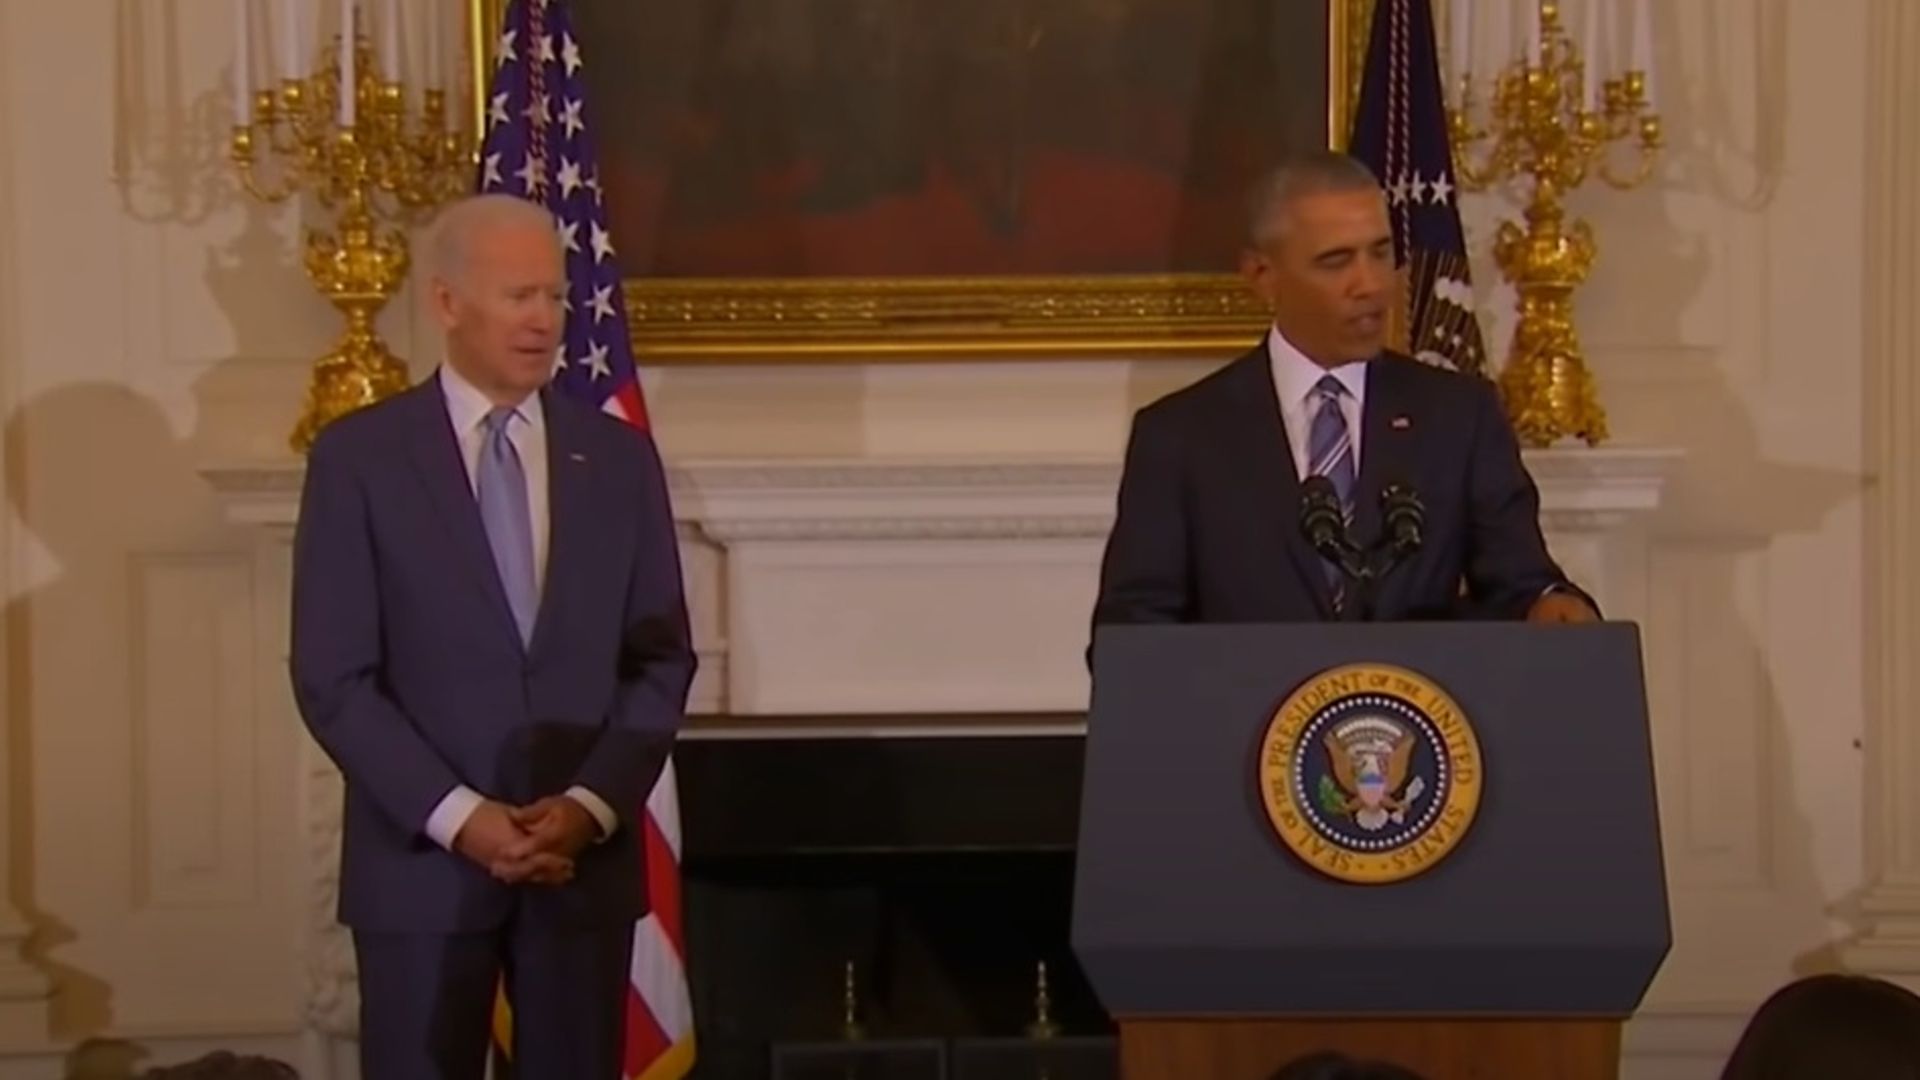 Joe Biden with Barack Obama back in 2016 - Credit: YouTube